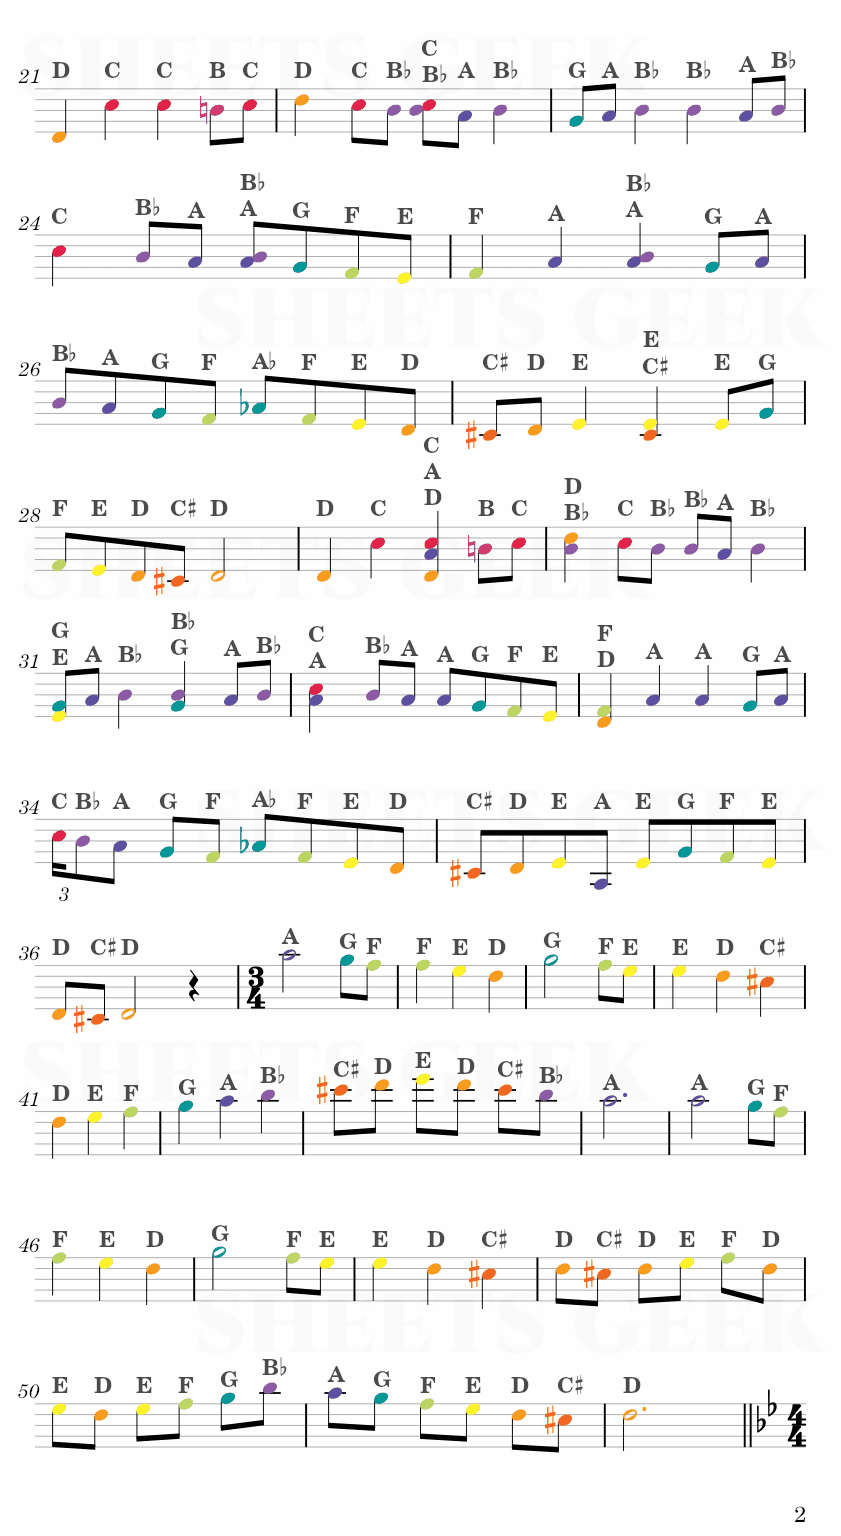 Calıkusu - Esin Engin (ANATEMA) Easy Sheet Music Free for piano, keyboard, flute, violin, sax, cello page 2